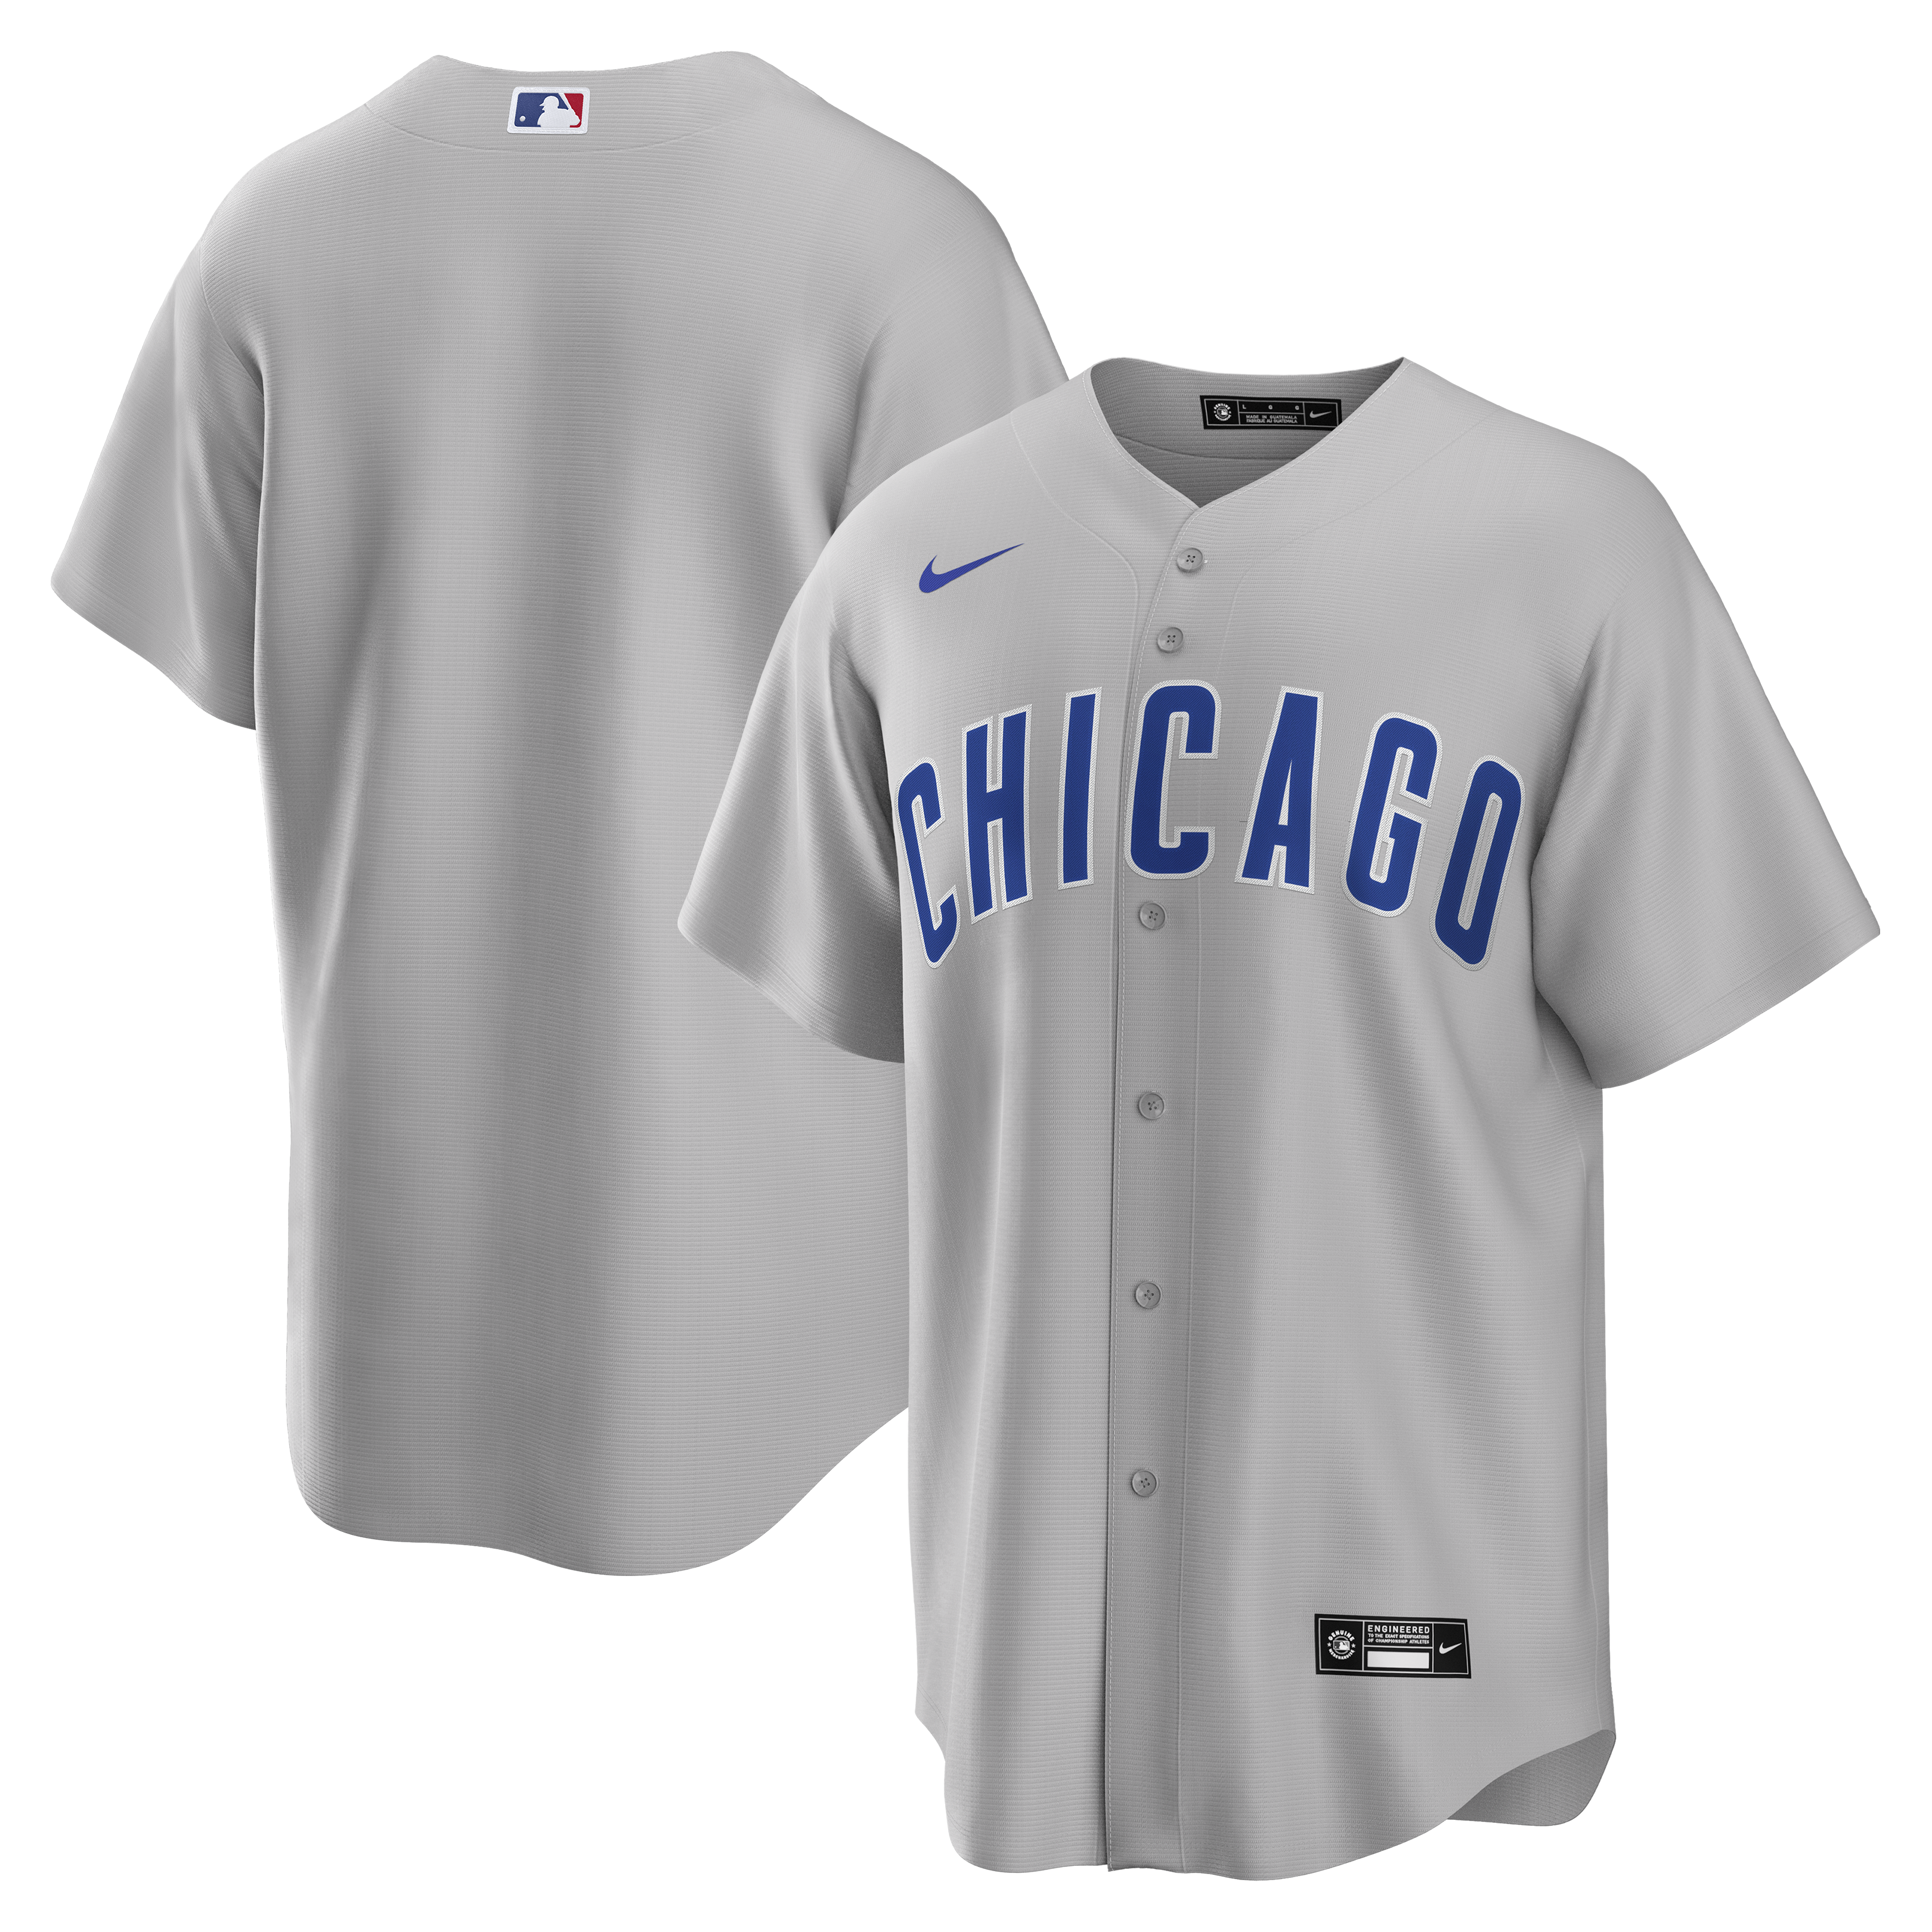 Nike / Men's Chicago Cubs Black Cool Base Jersey